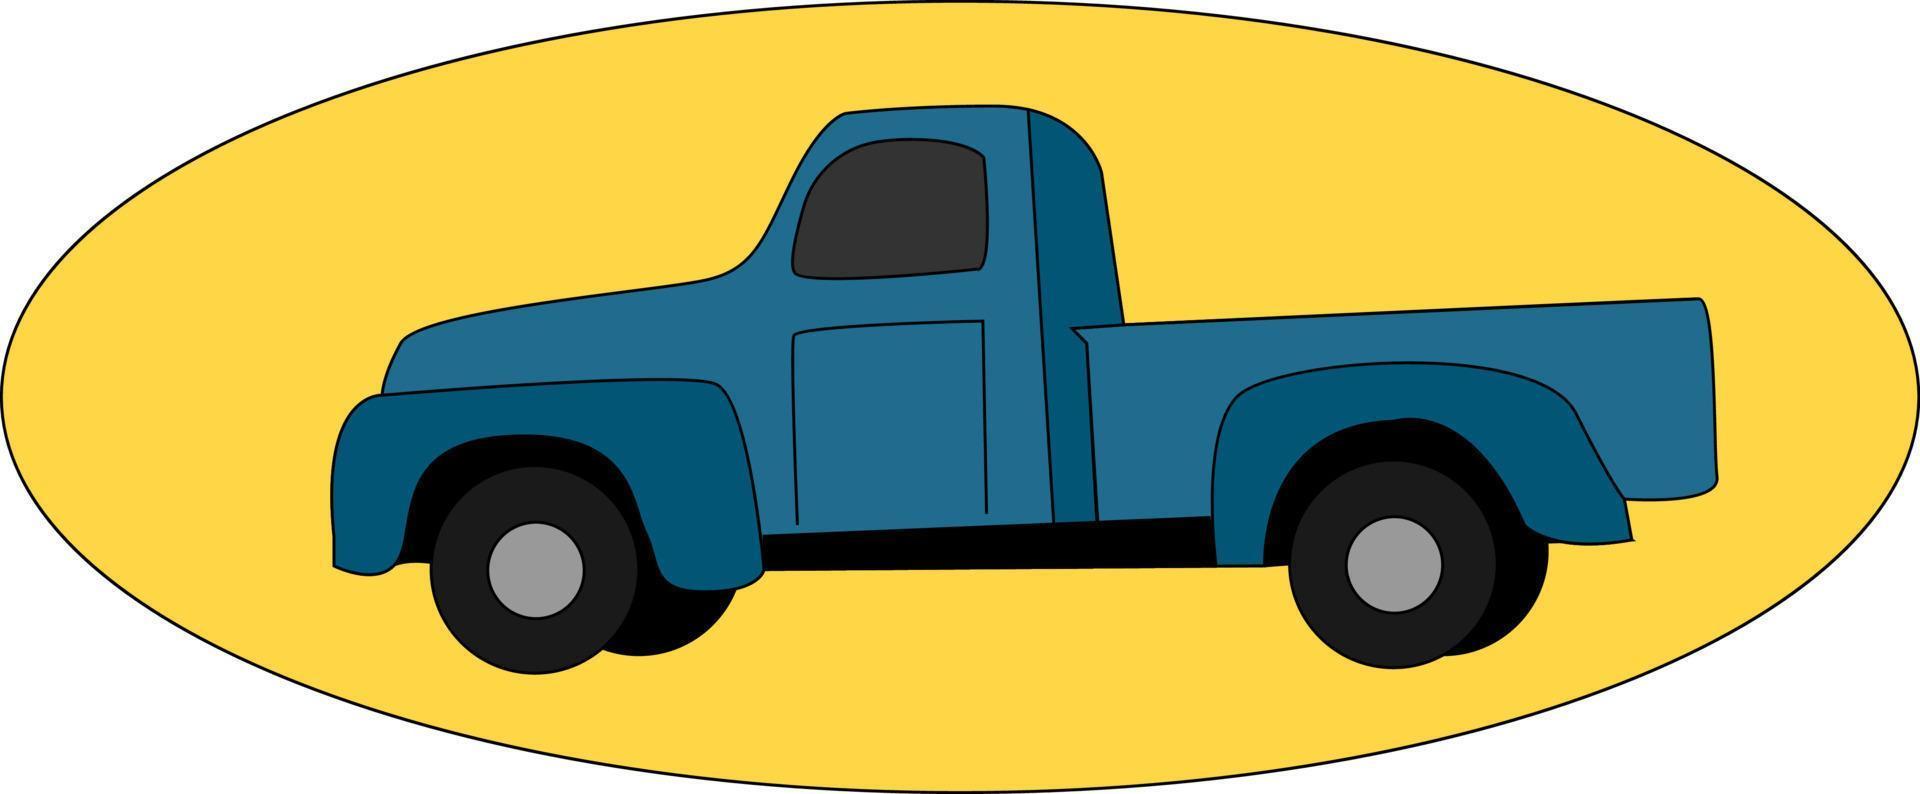 Camioneta azul, ilustración, vector sobre fondo blanco.